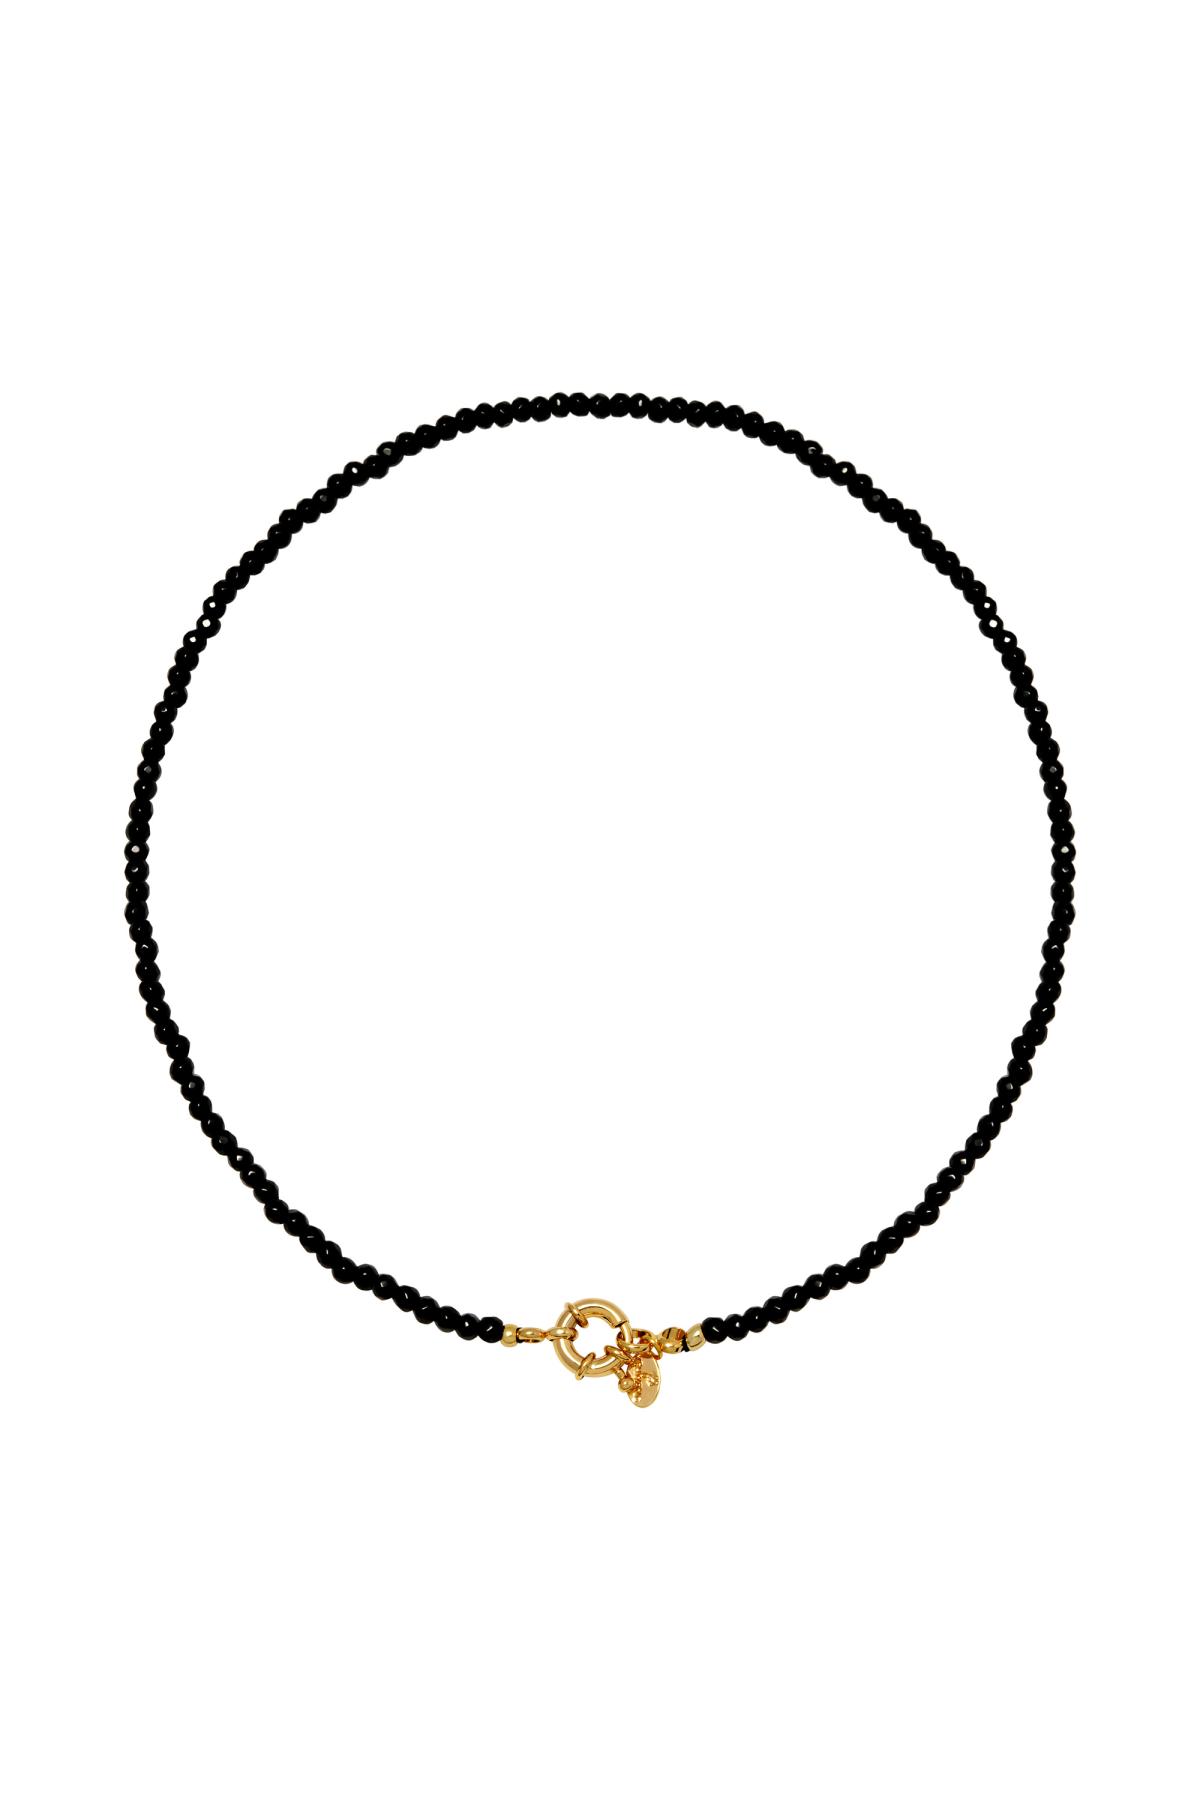 Necklace Beautiful Black Copper h5 